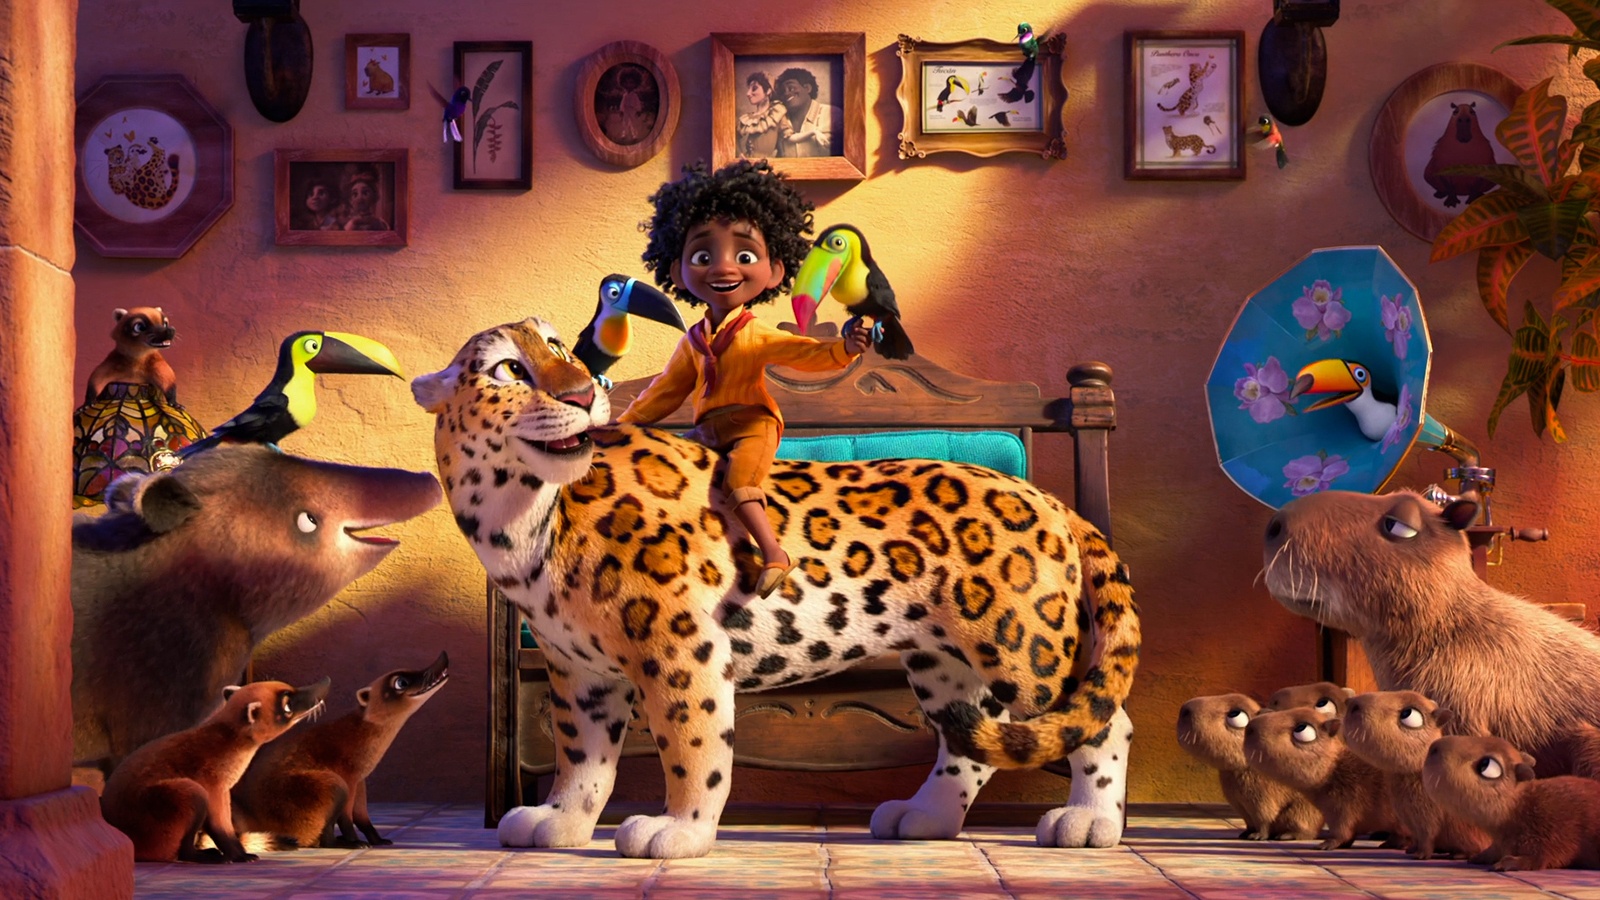 Trailer for the new Disney movie Encanto